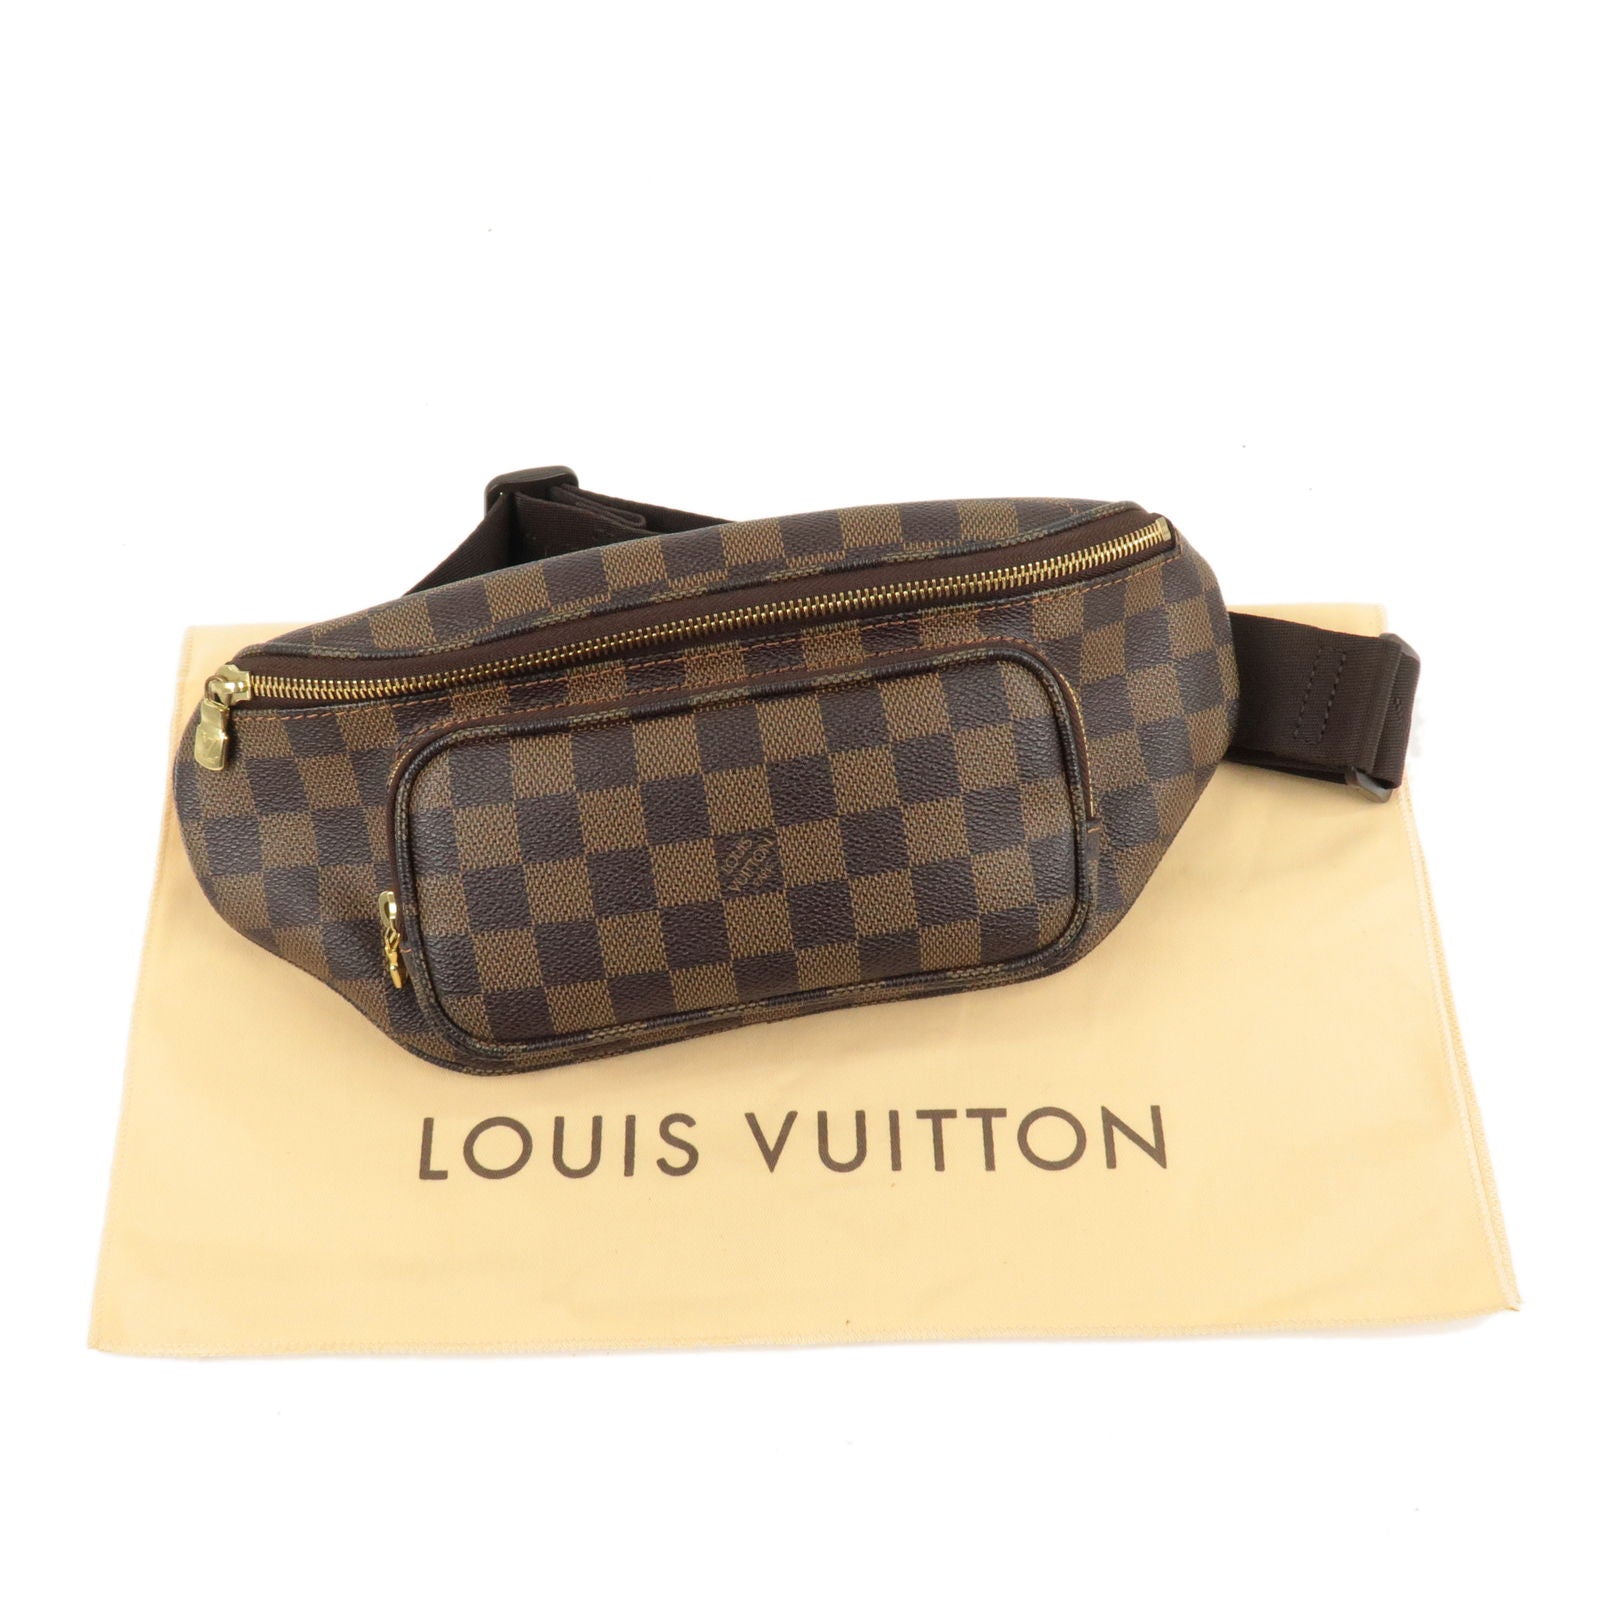 LOUIS VUITTON Louis Vuitton Damier Jean Acrobatic Body Bag Waist